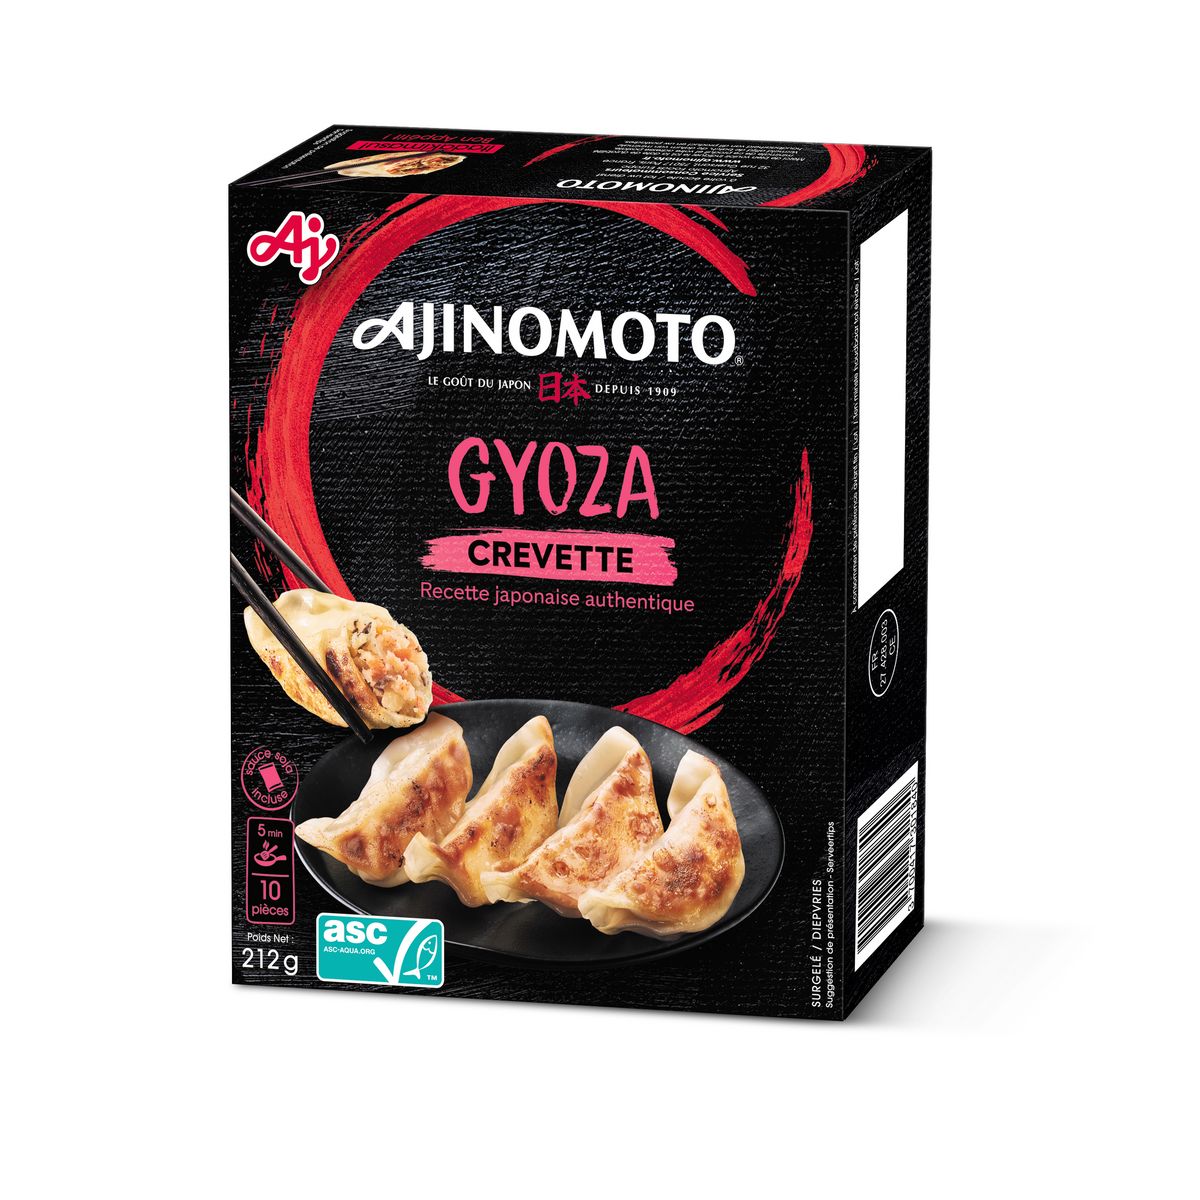 AJINOMOTO Gyoza crevettes sauce soja incluse 10 pièces 212g